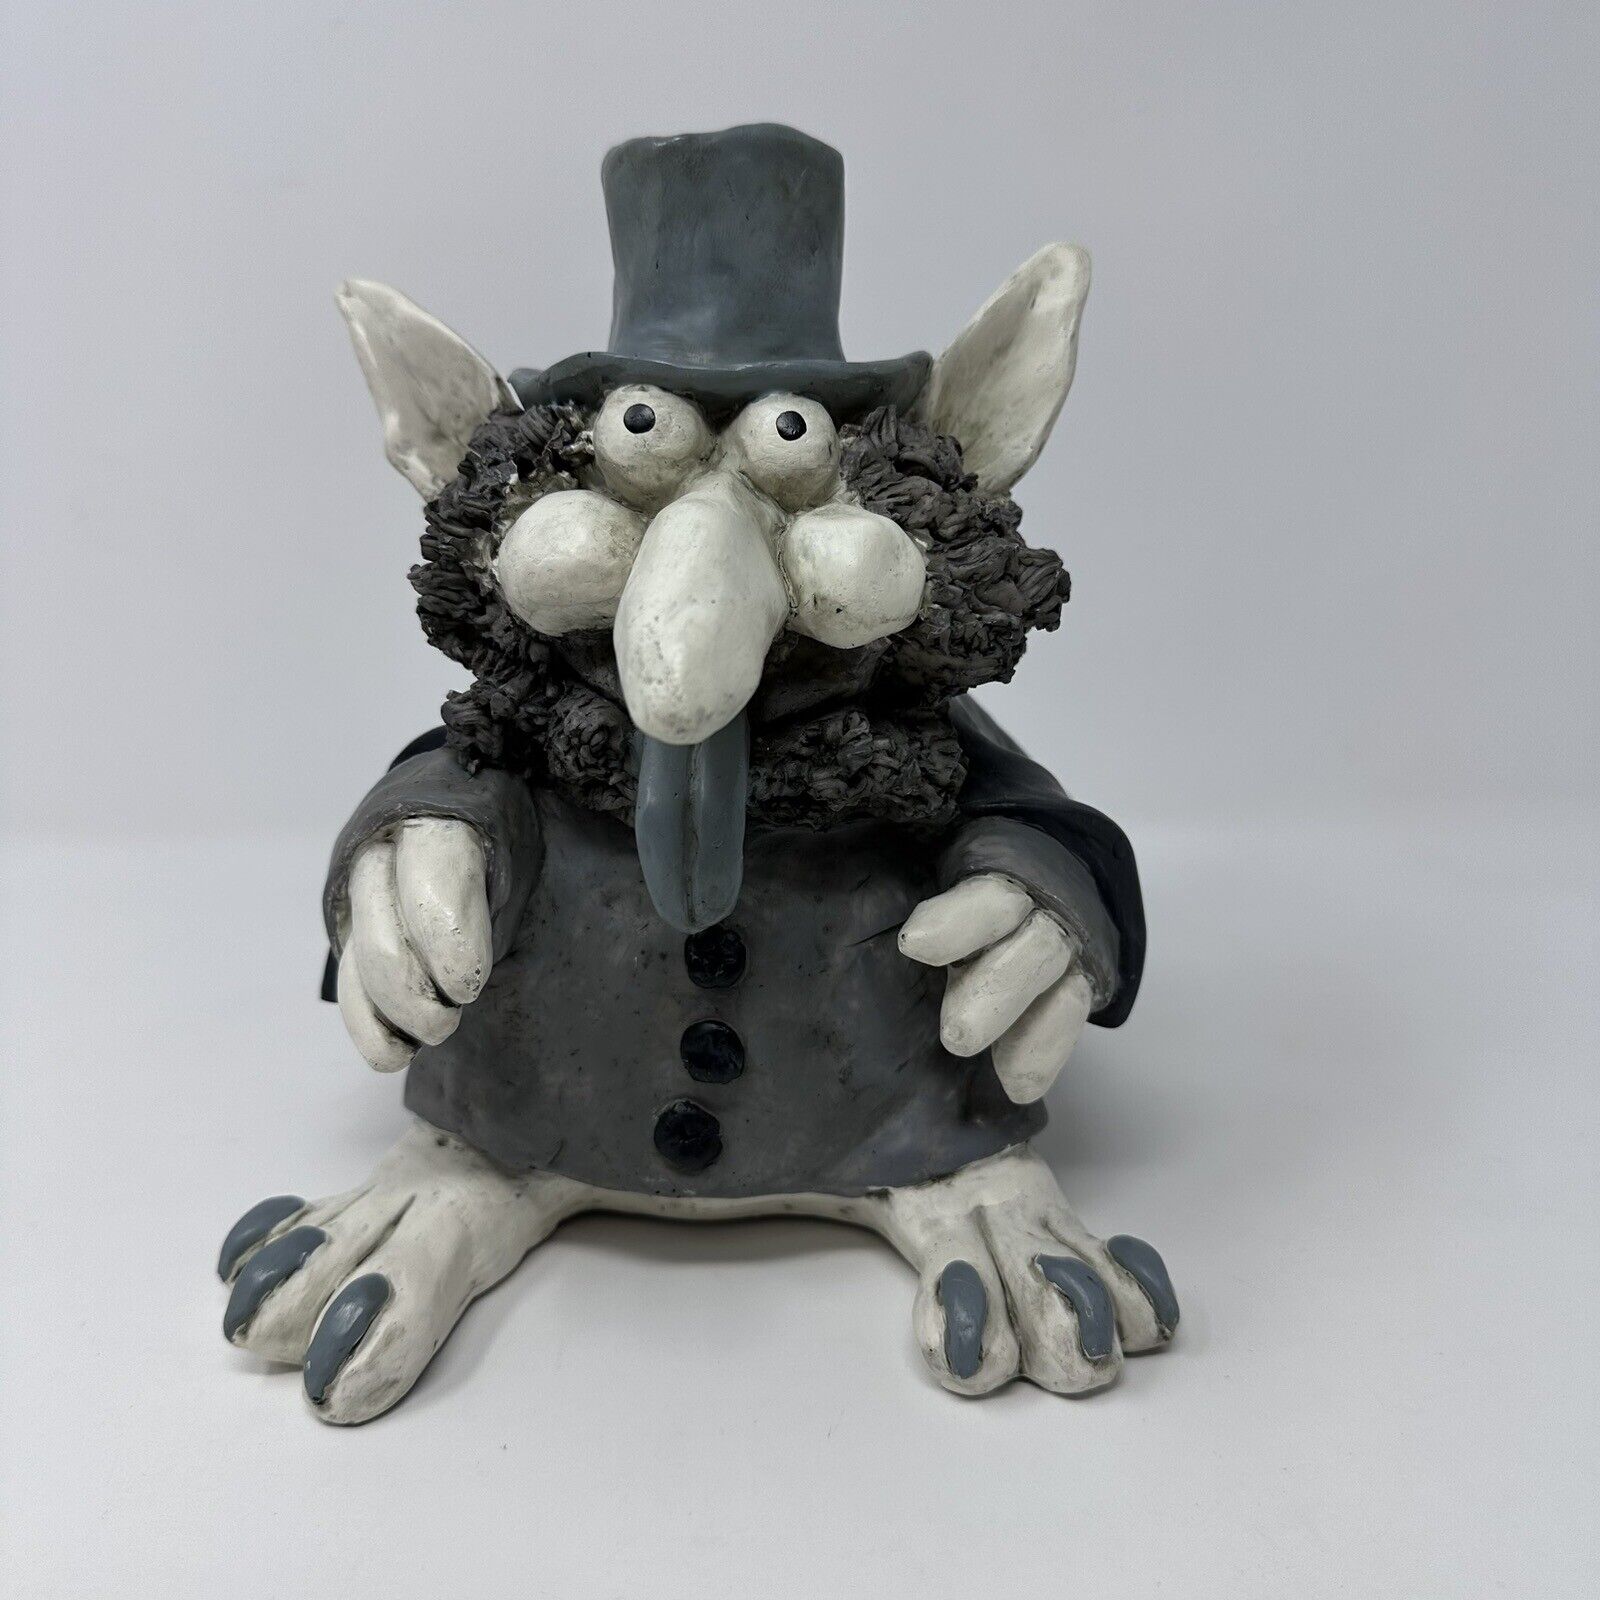 Paolo Chiari Horrible Figure Troll Figurine Gray Top Hat Coat Cape Vintage Goth